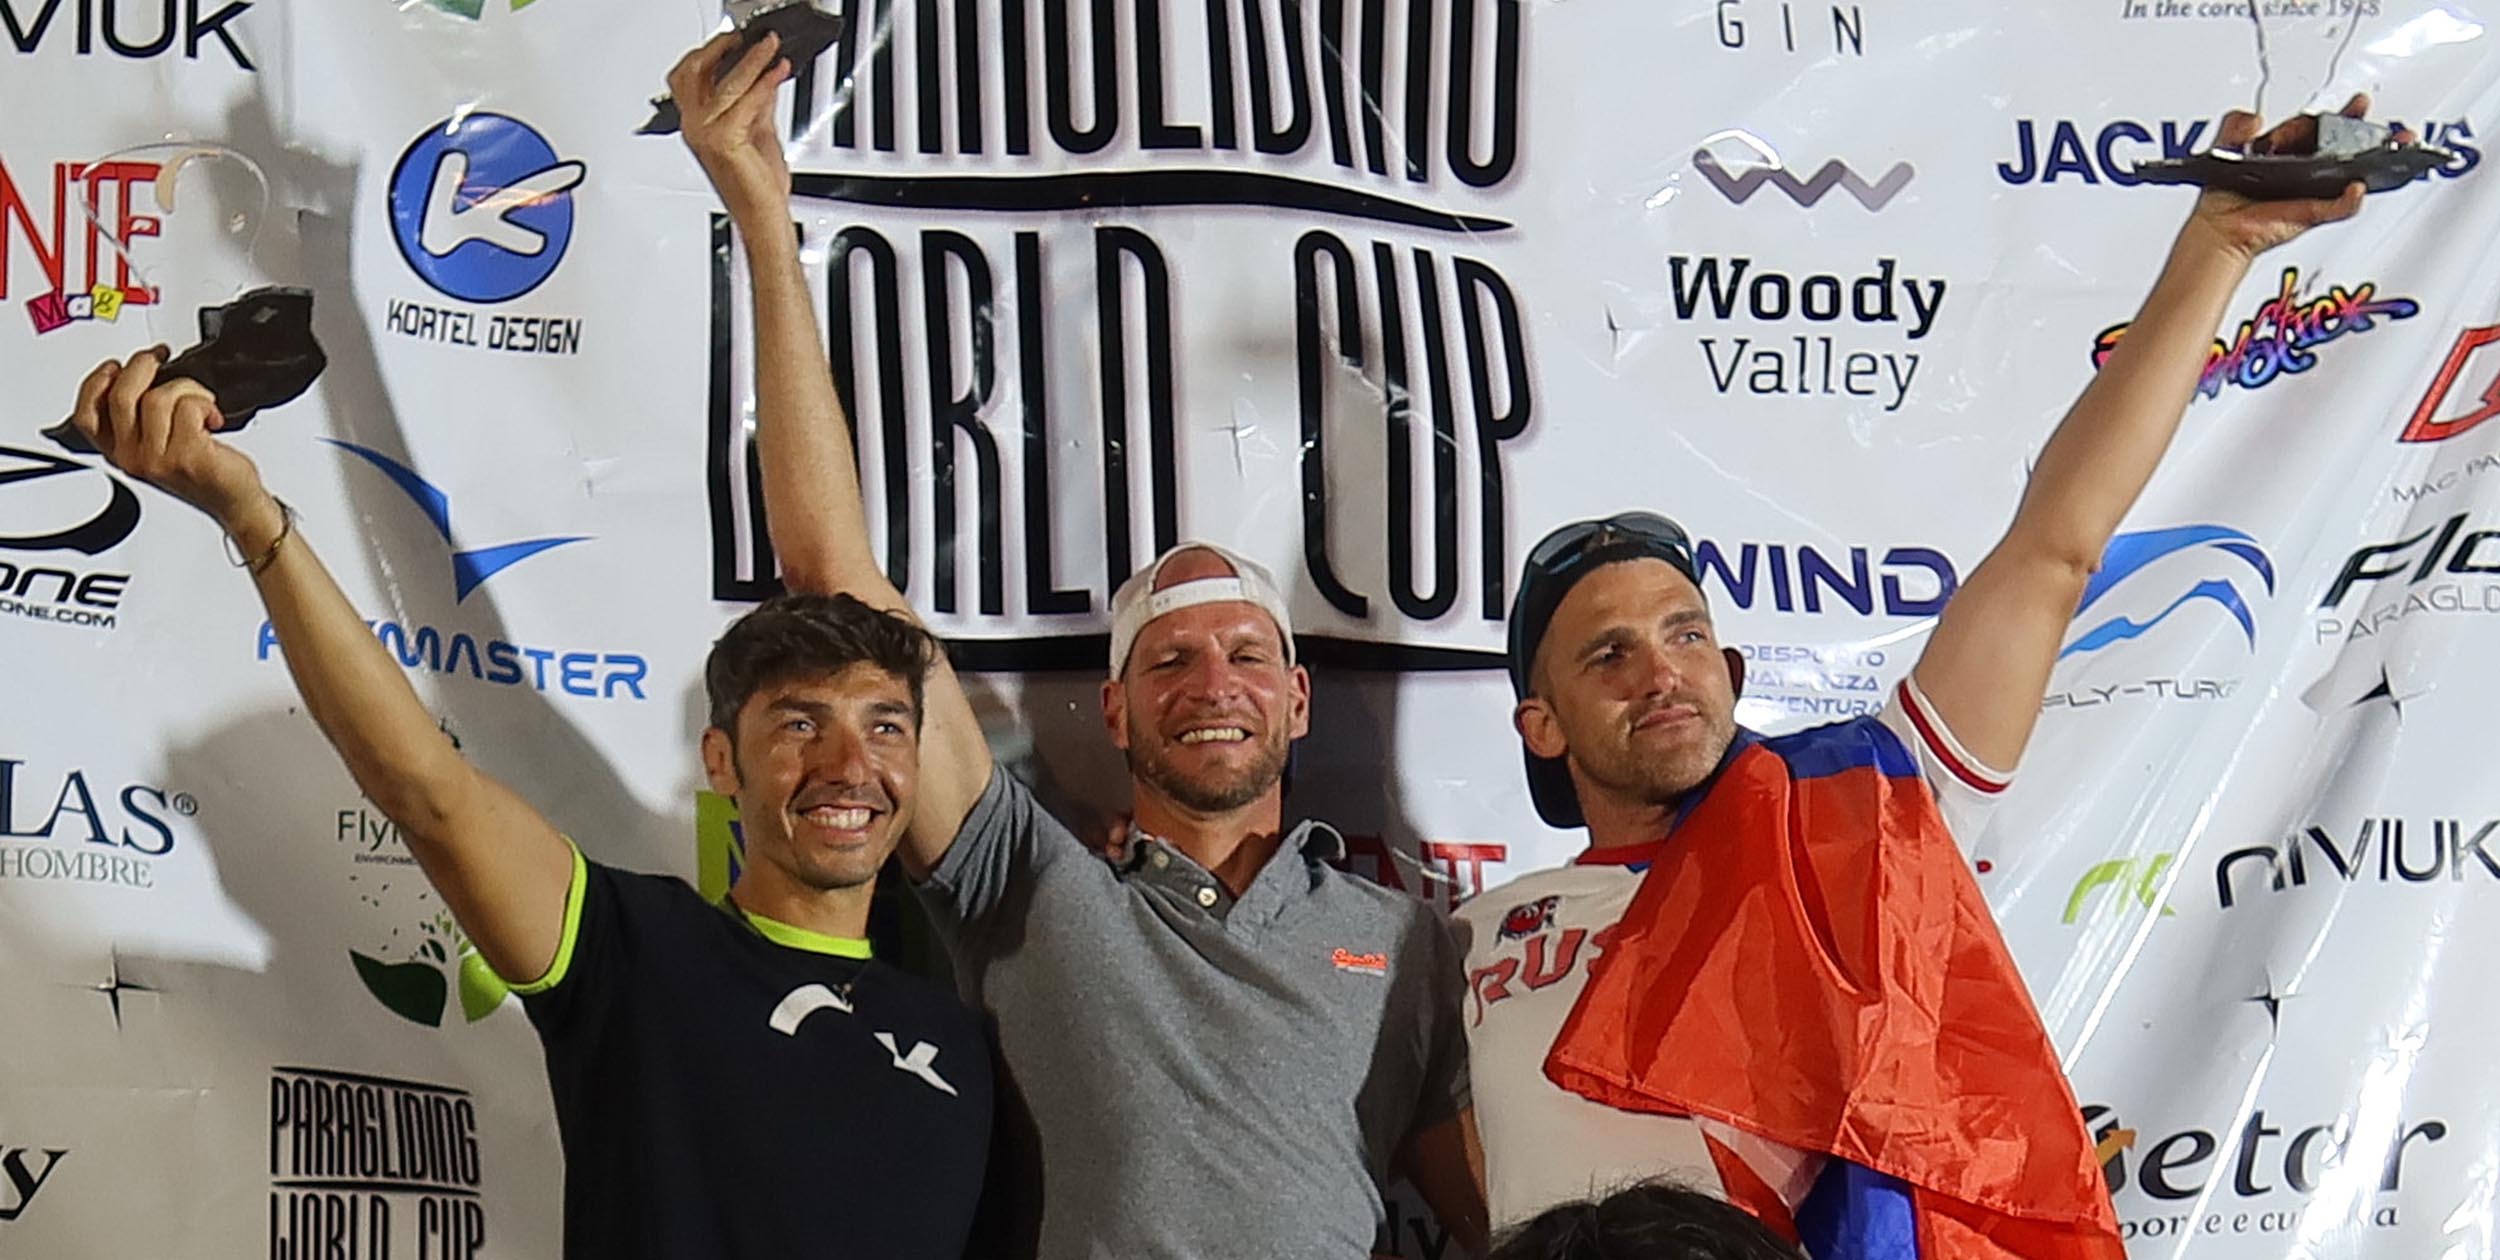 Winners of the La Rioja Paragliding World cup. Photo: Ruth Jessop